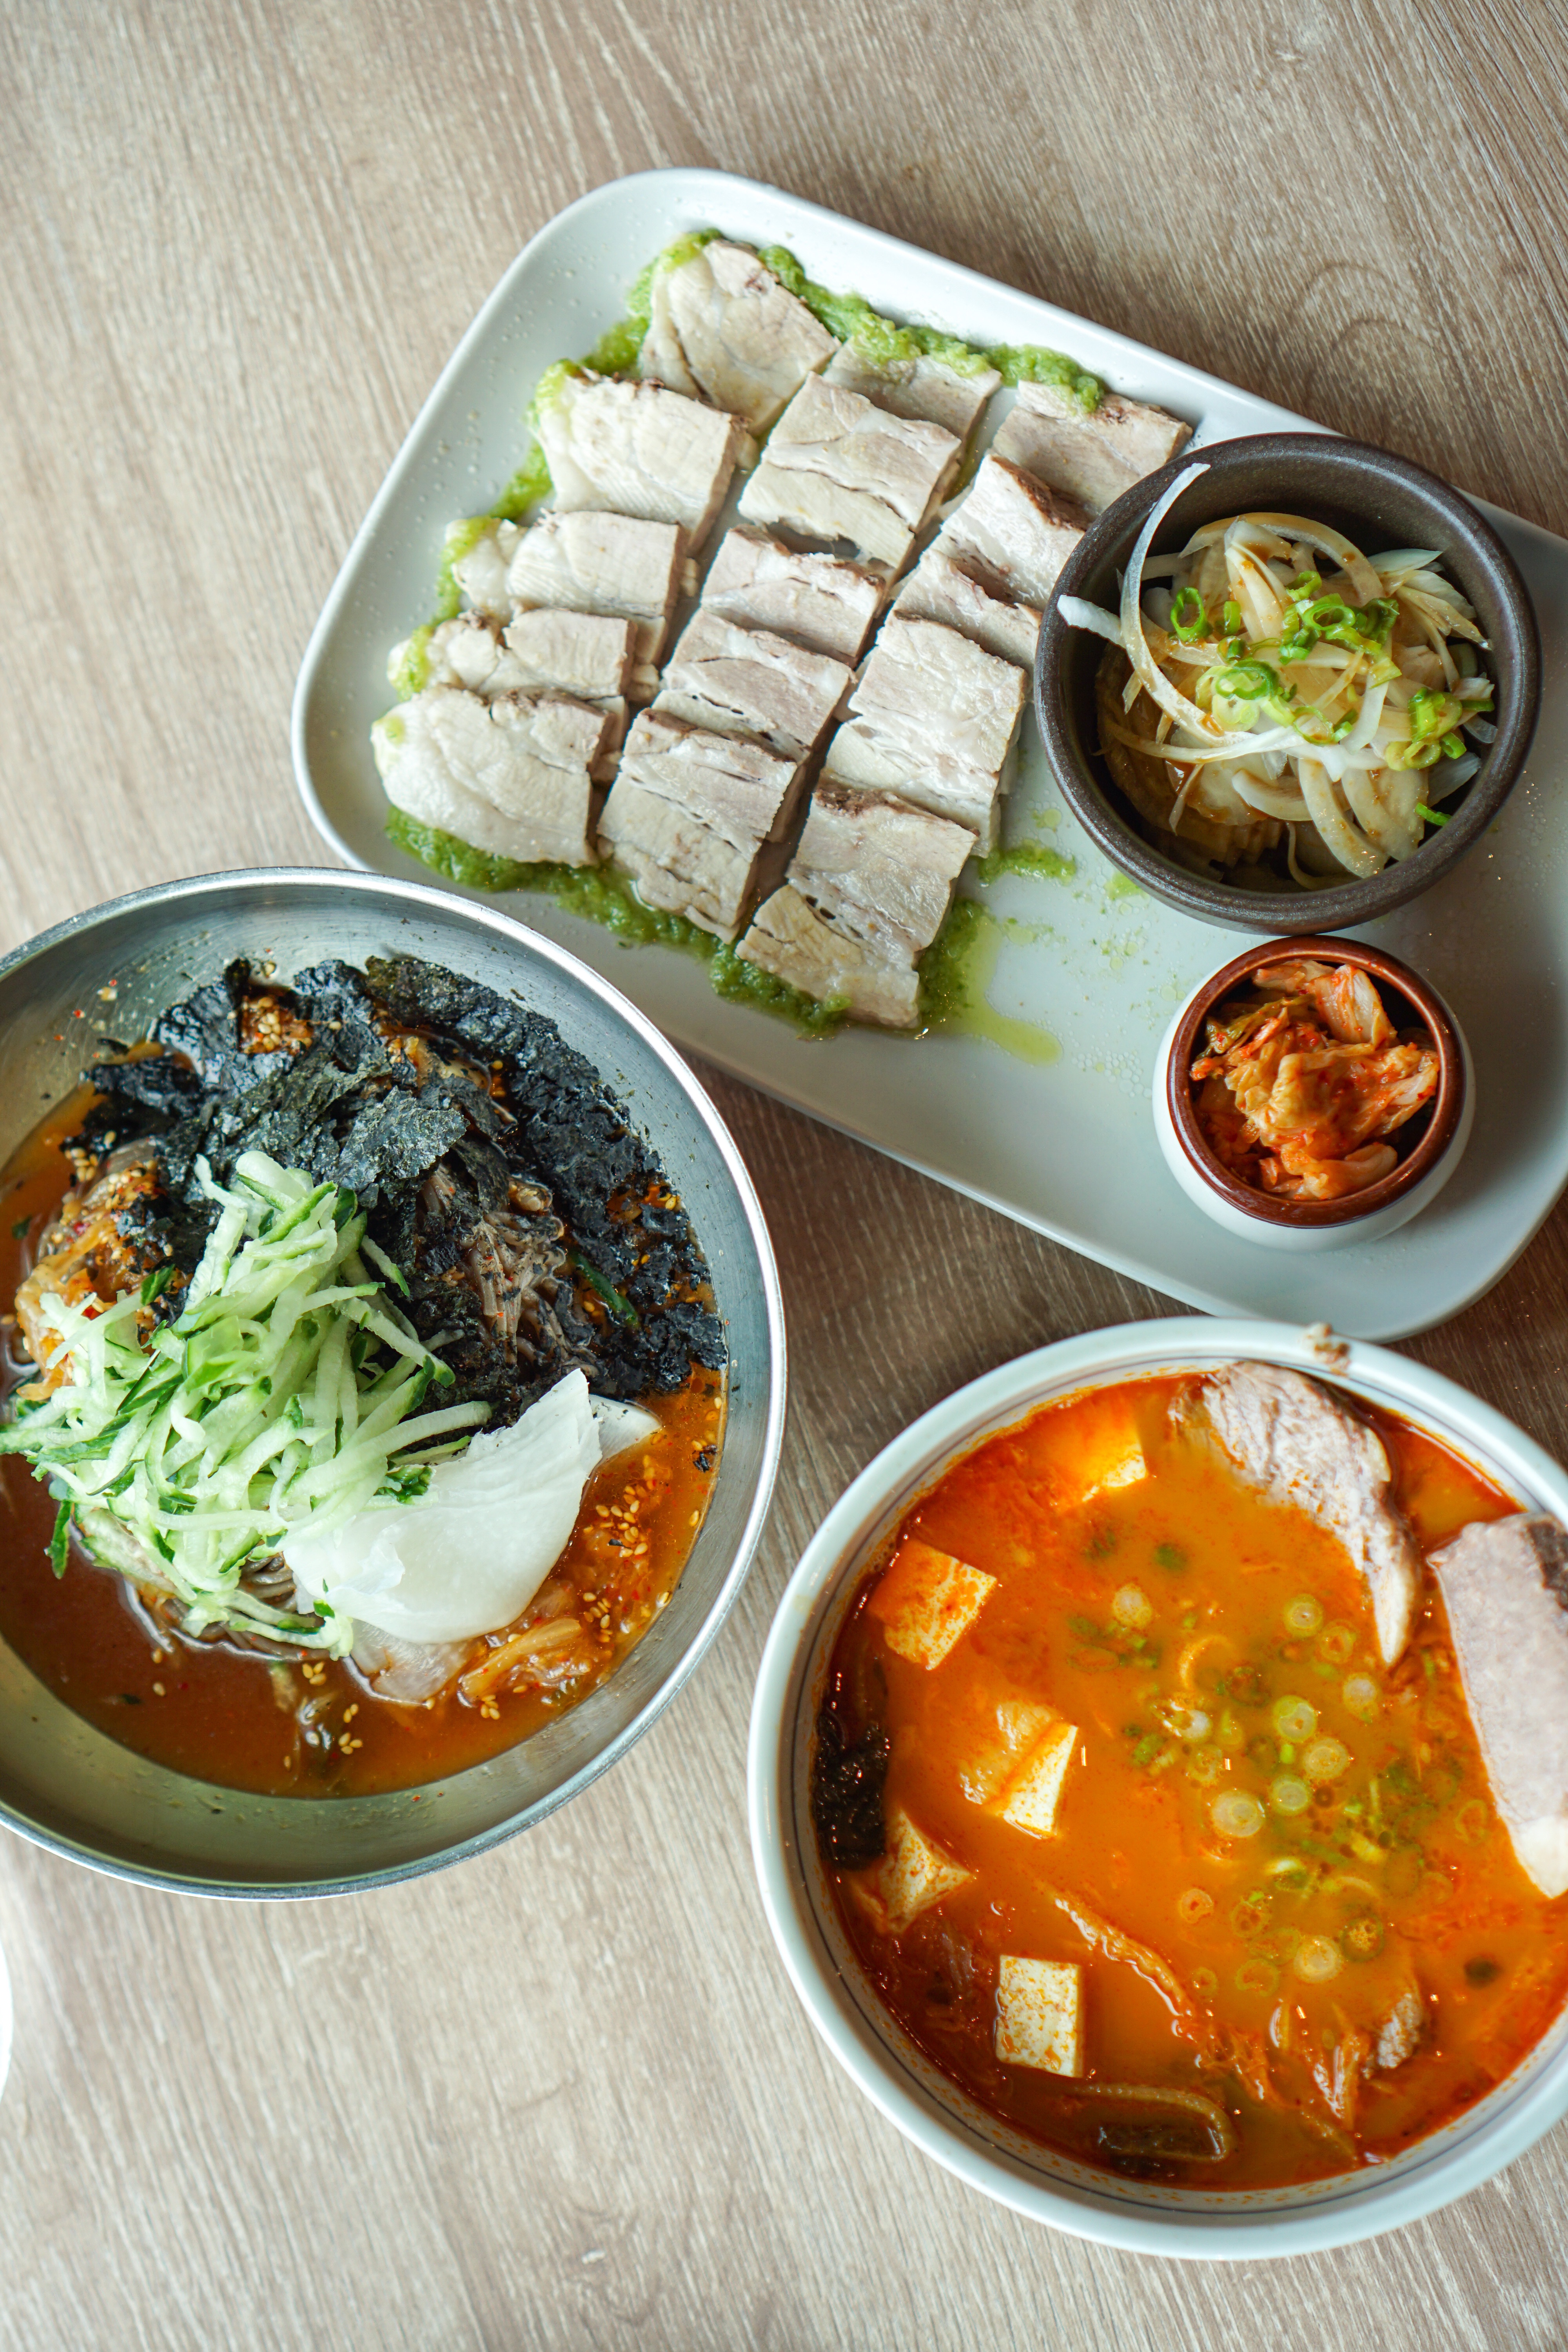 Oiso Kimchi Cafe - New Spot for Korean Food on Kingsway